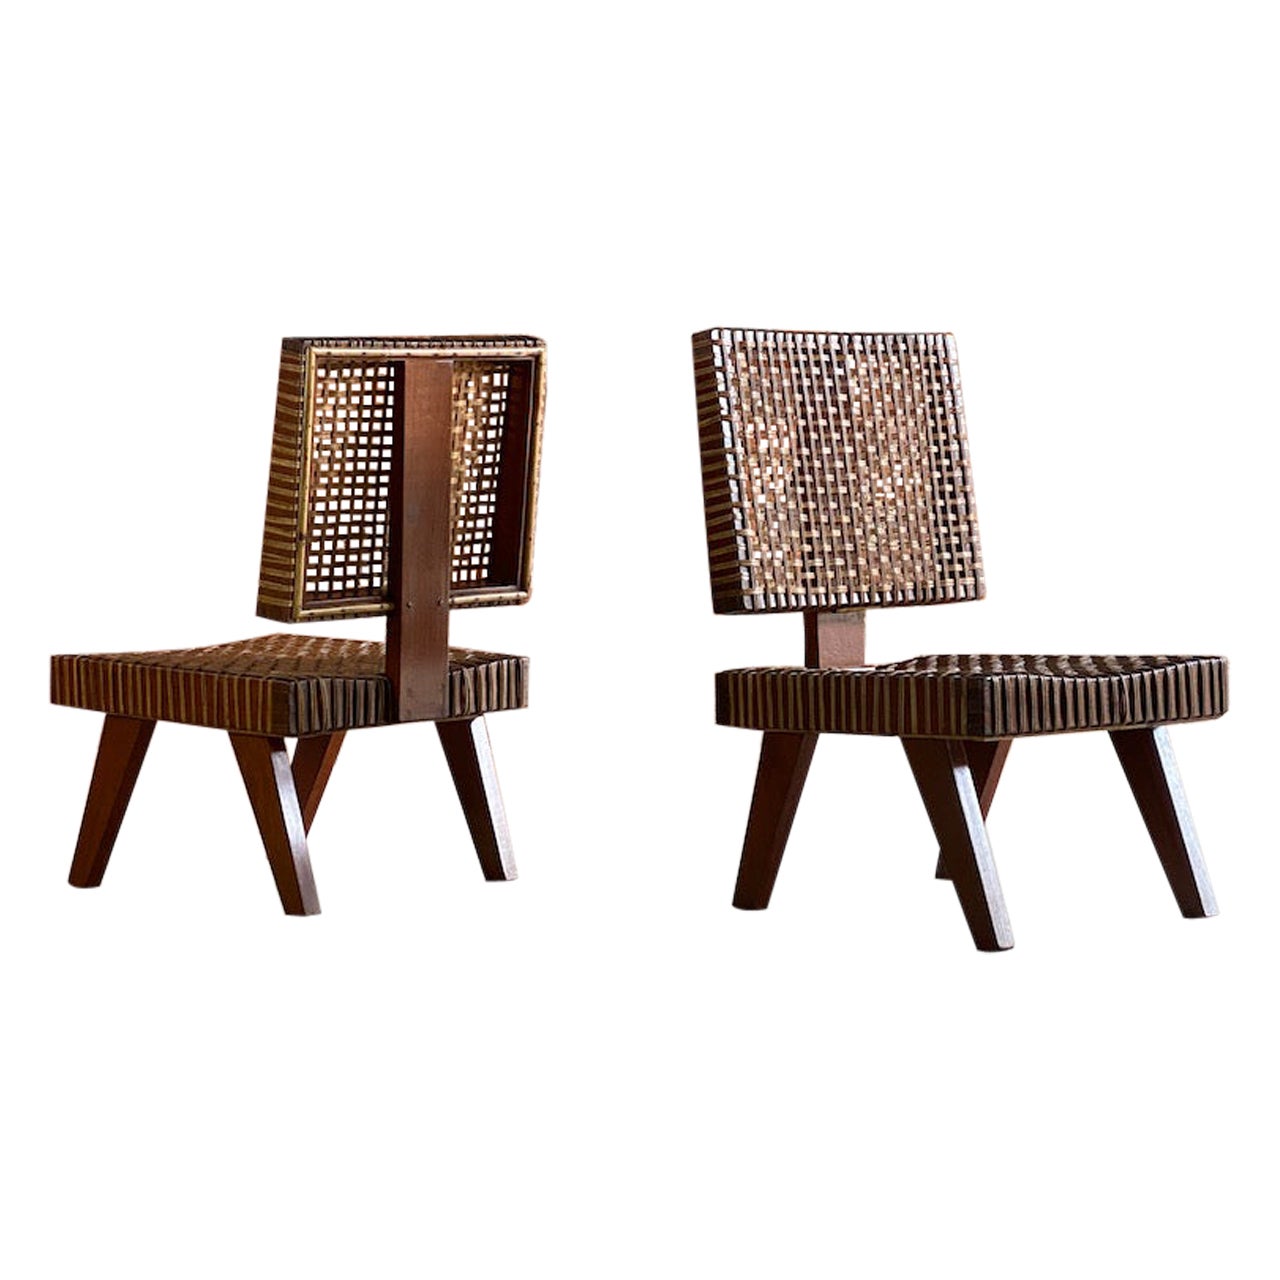 Pierre Jeanneret Rare Lounge Chairs Chandigarh Circa 1955-56